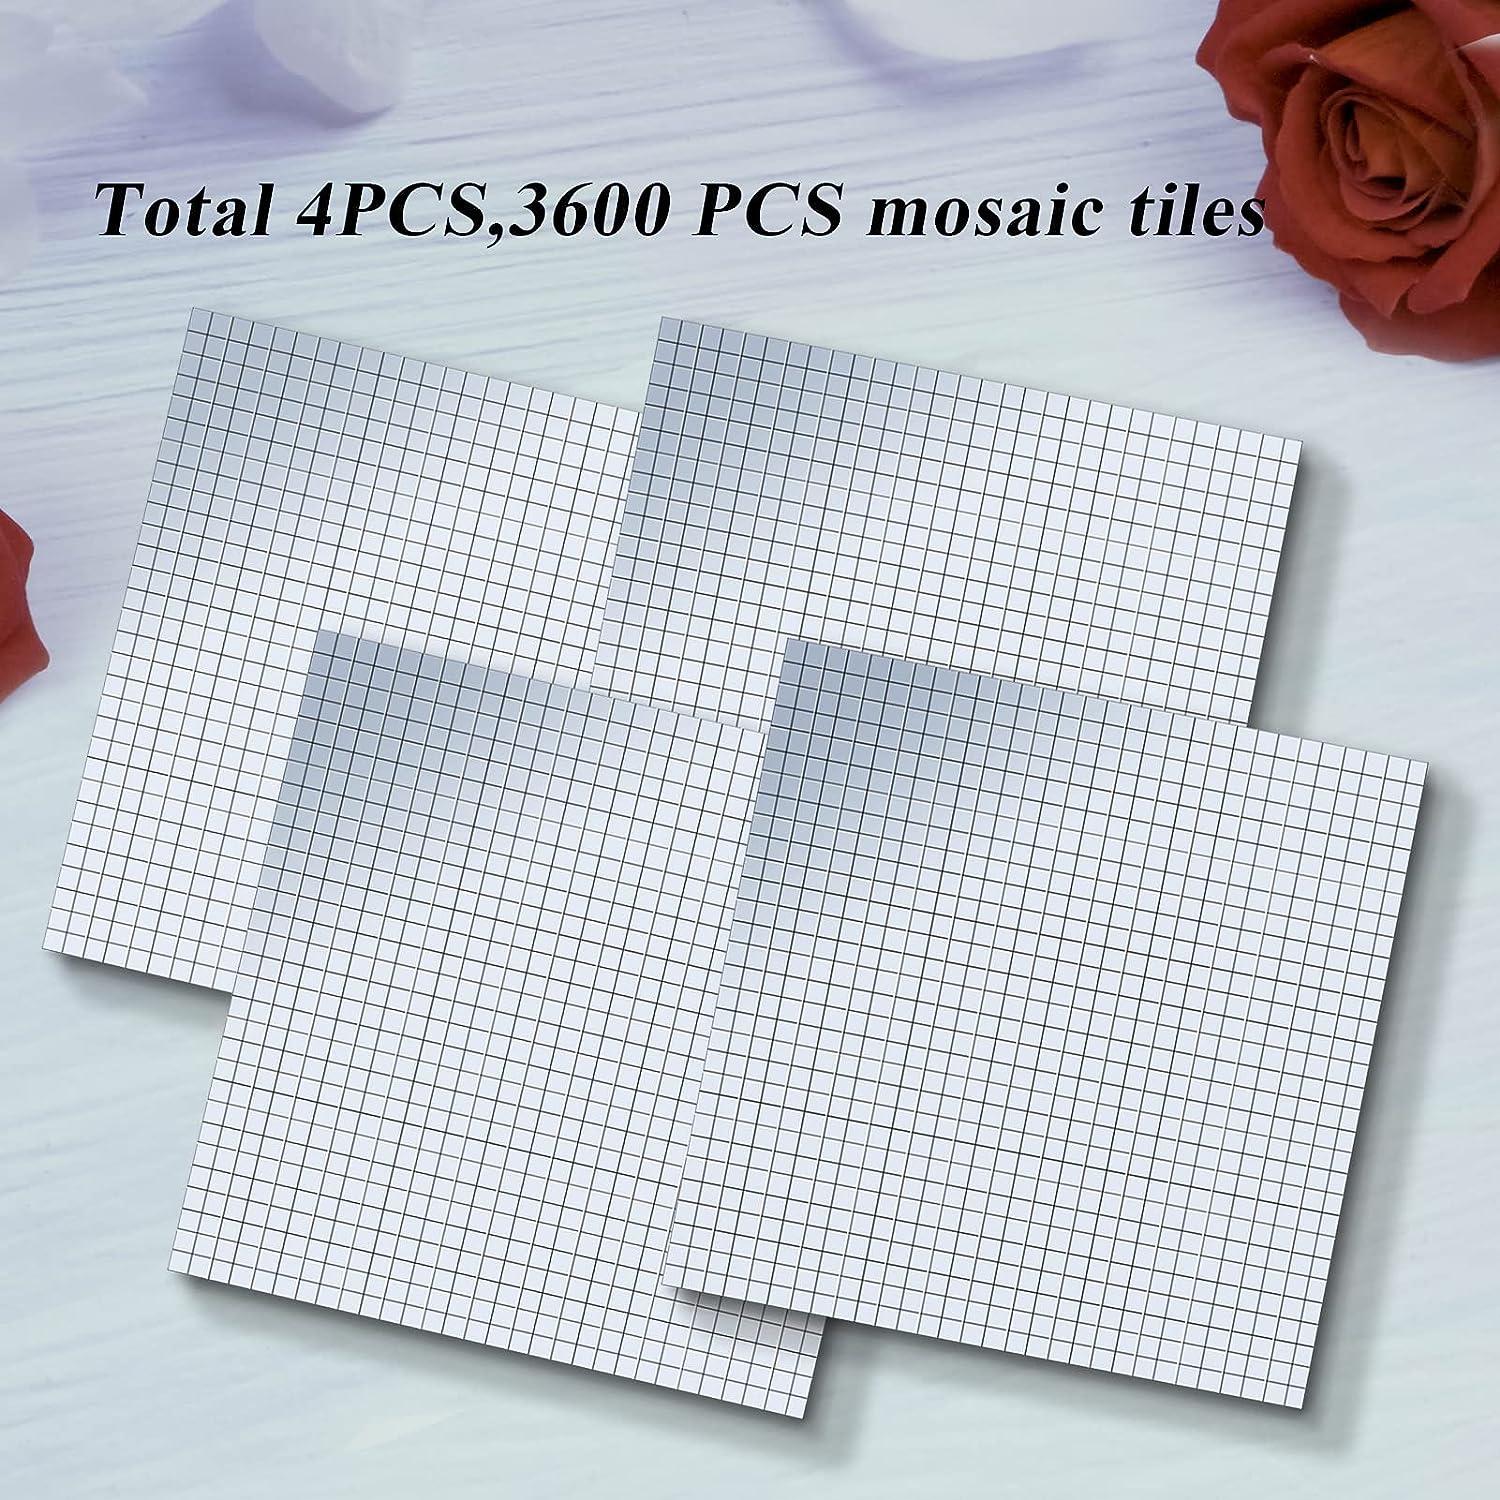 PP OPOUNT 2160 PCS Mini Mosaic Tiles, 1 Roll 5 x 5 mm Self